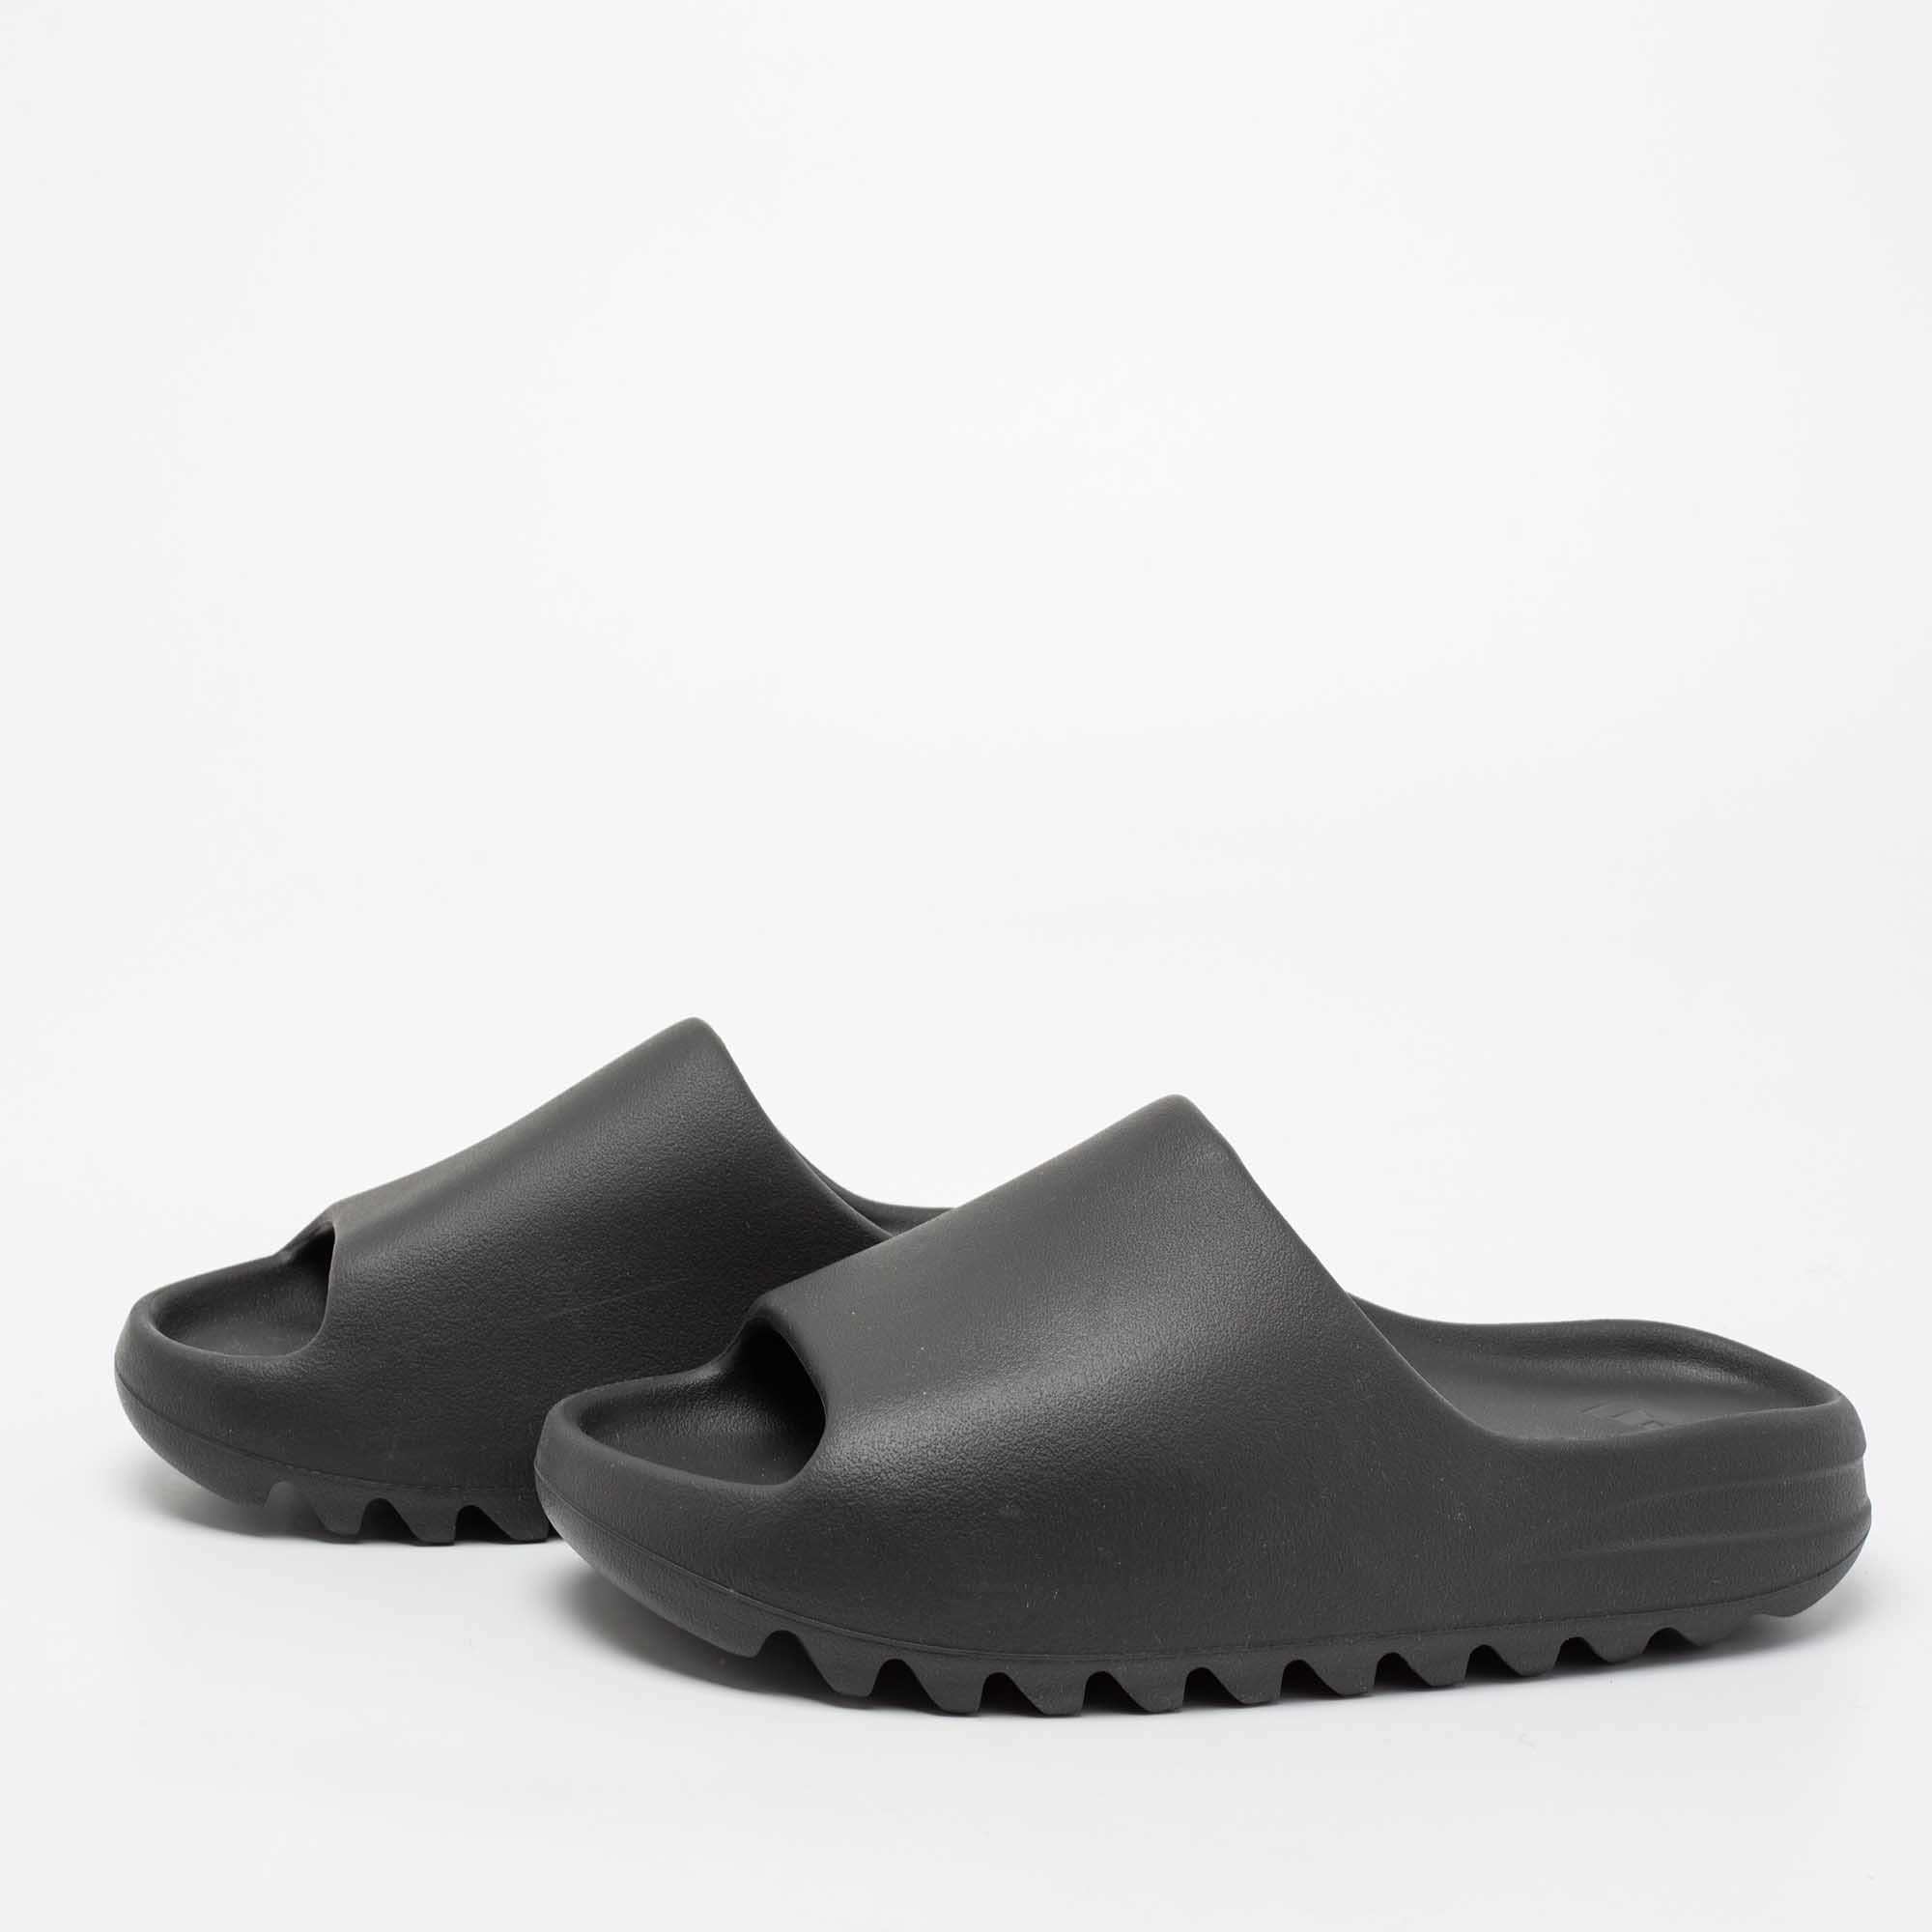 

Yeezy x adidas Black Rubber Onyx Flat Slides Size